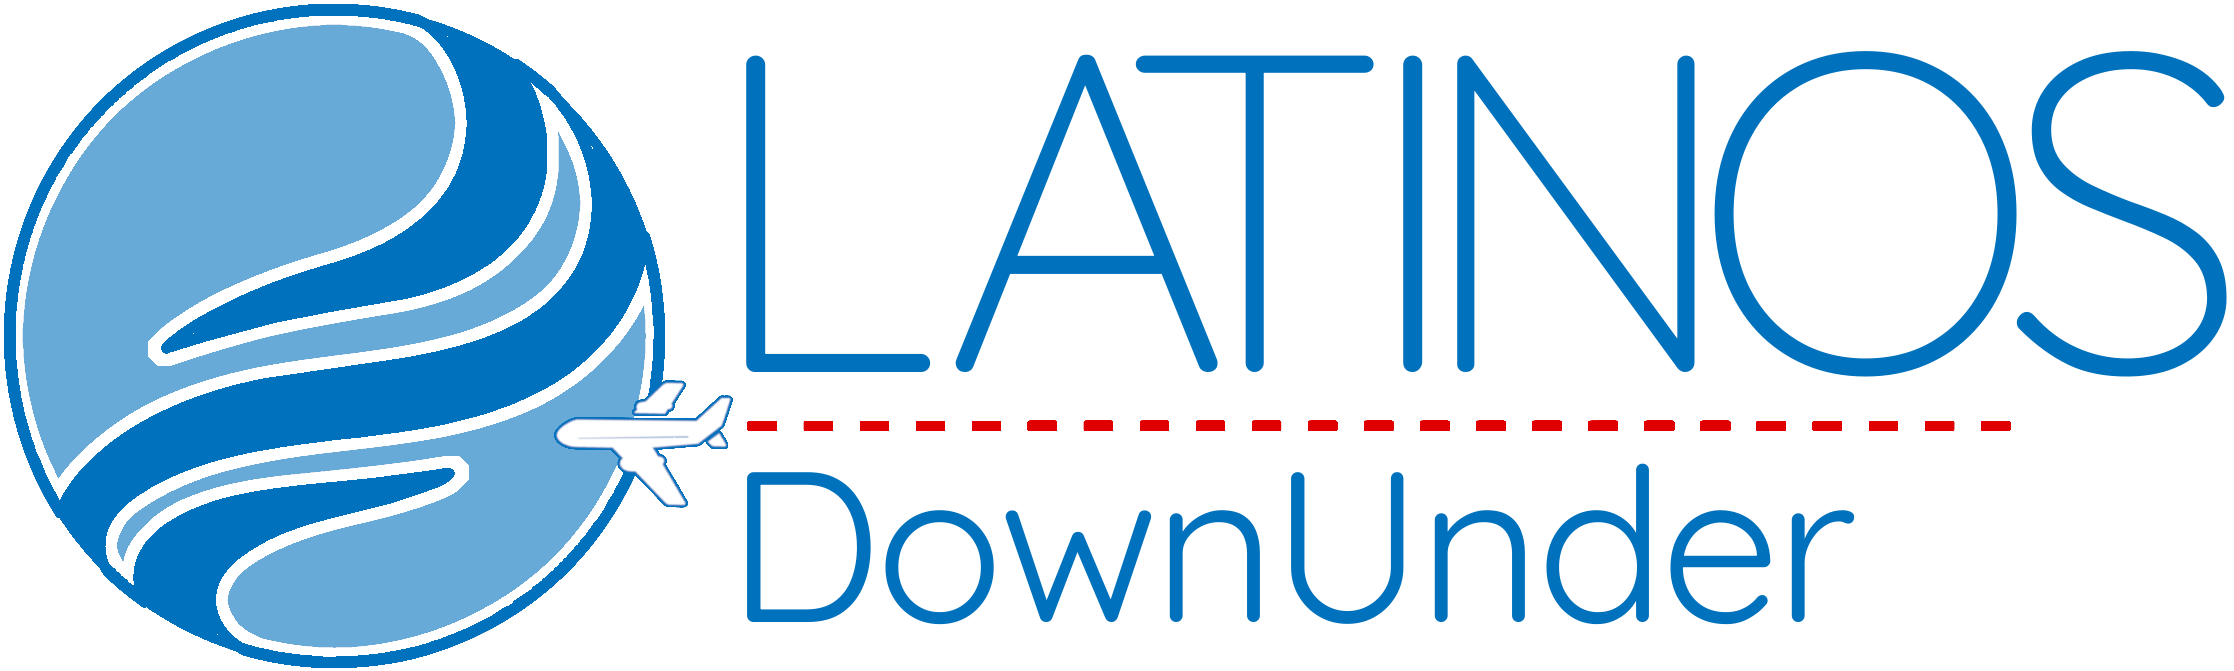 Latinos Down Under